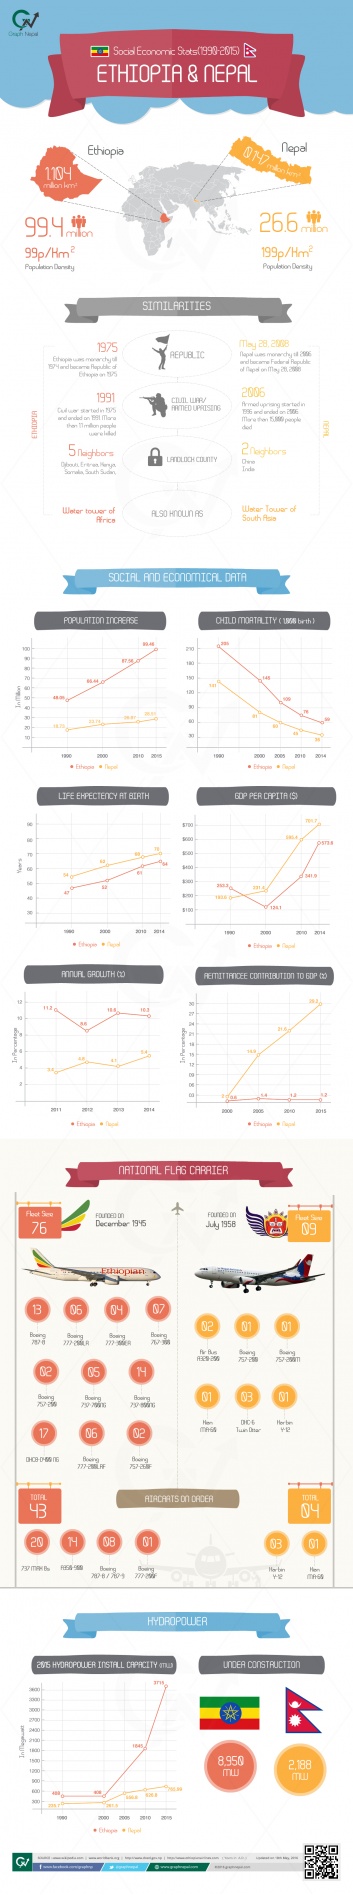 NEPAL & ETHIOPIA  | Social Economic Stats(1990-2015)  